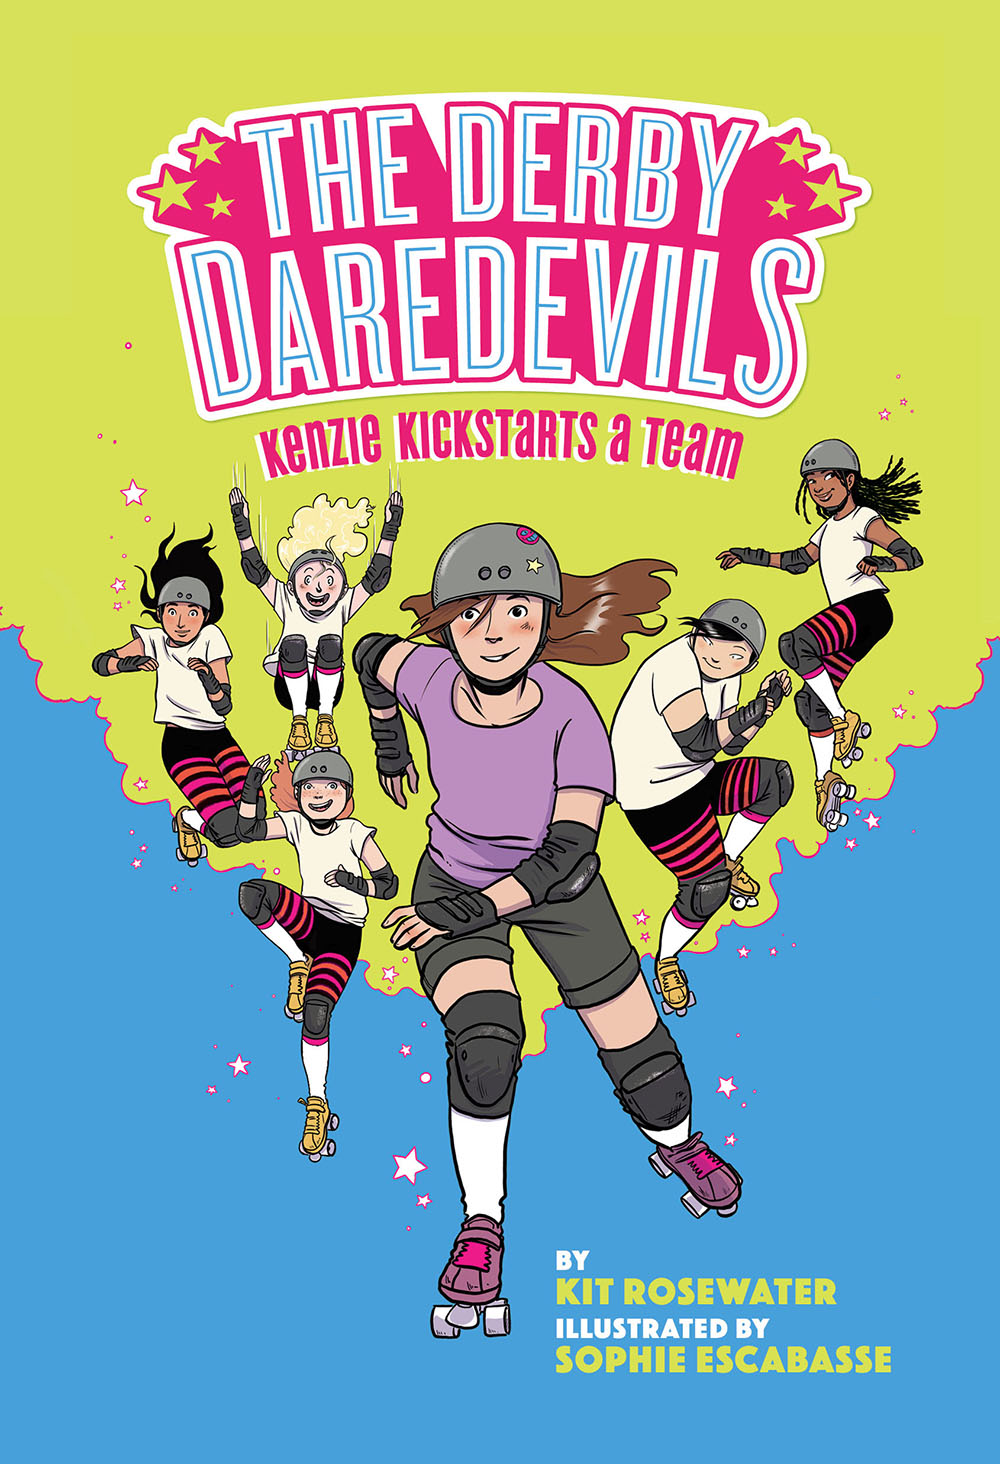 The Derby Daredevils: Kenzie Kickstarts a Team by Kit Rosewater & Sophie Escabasse